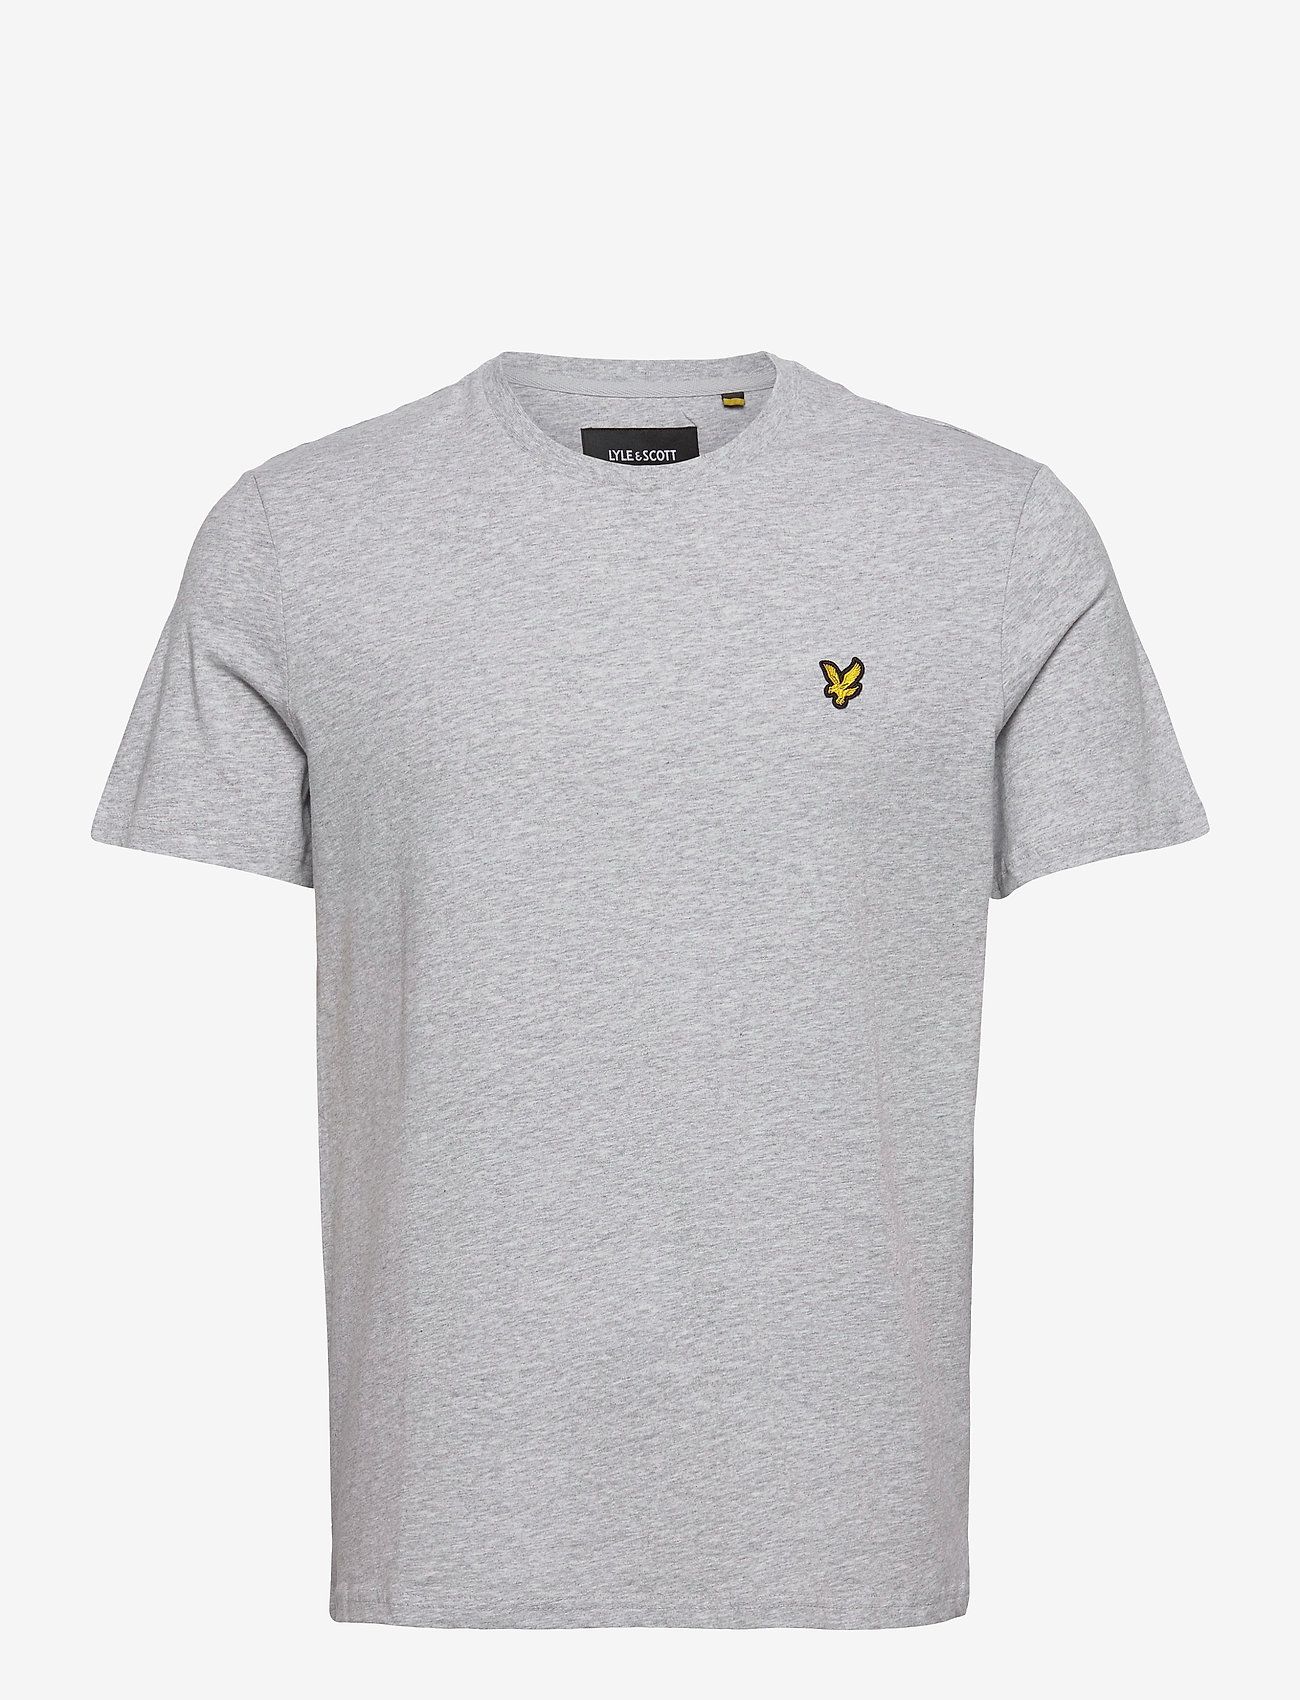 Lyle & Scott - Plain T-Shirt - lägsta priserna - light grey marl - 0